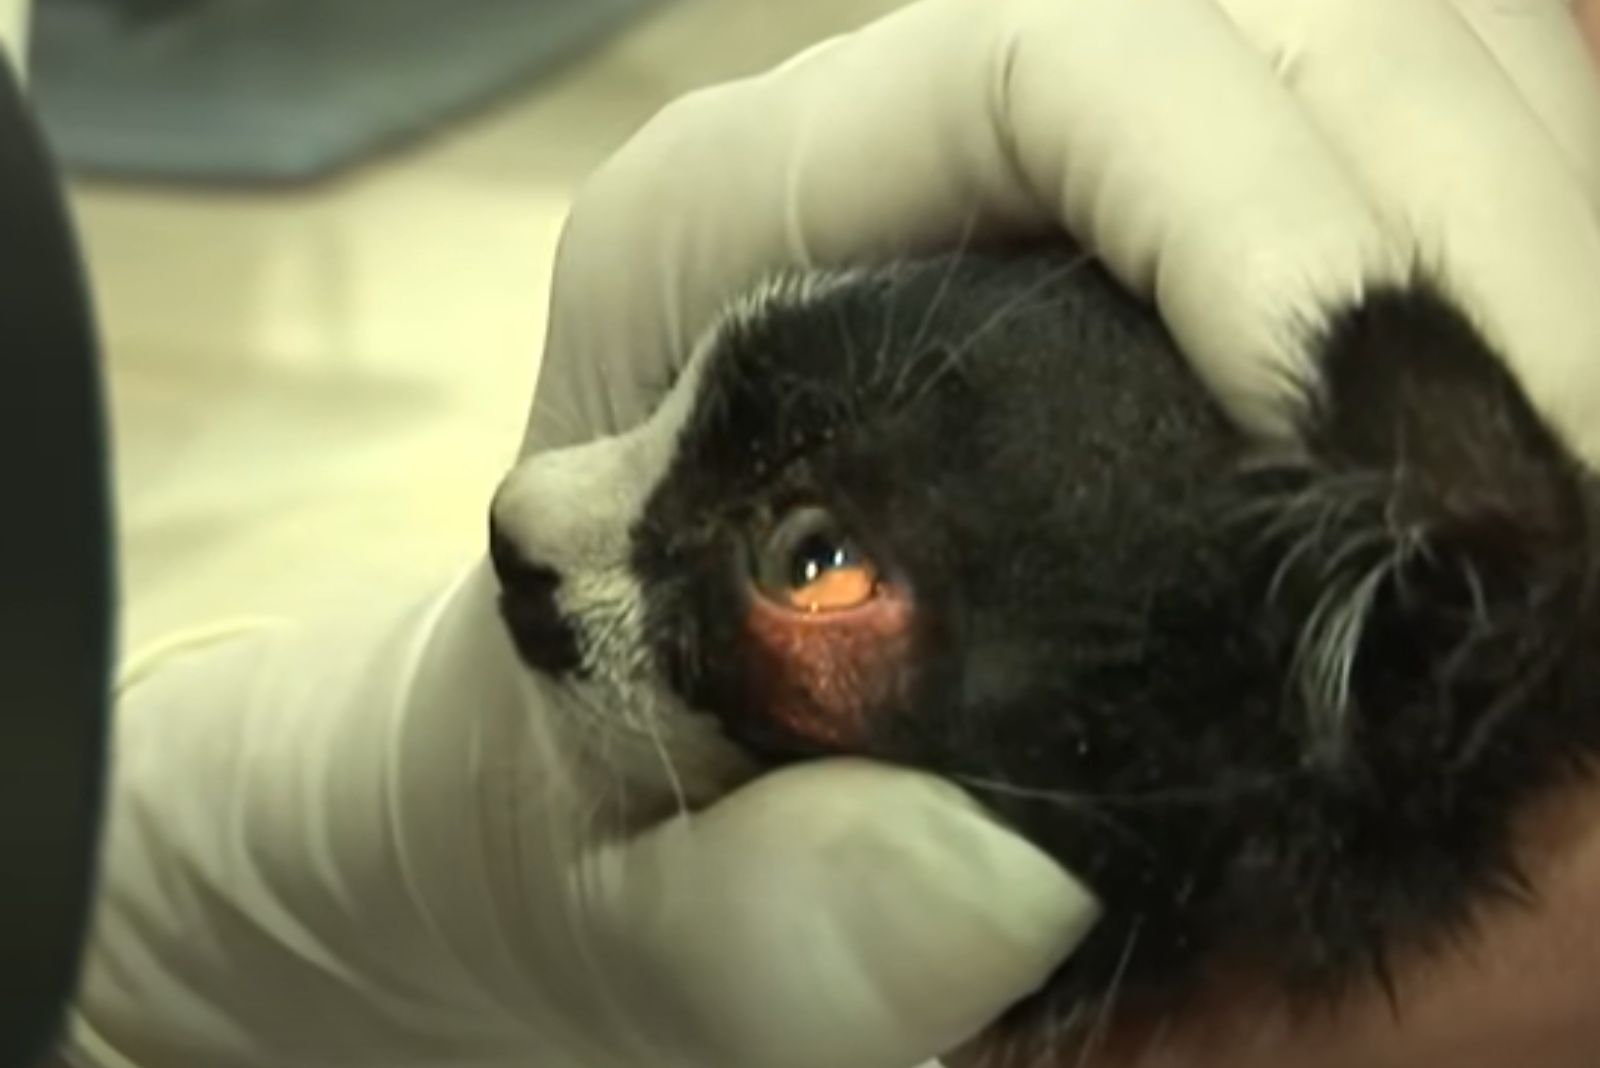 veterinarian looking at cat's eyes